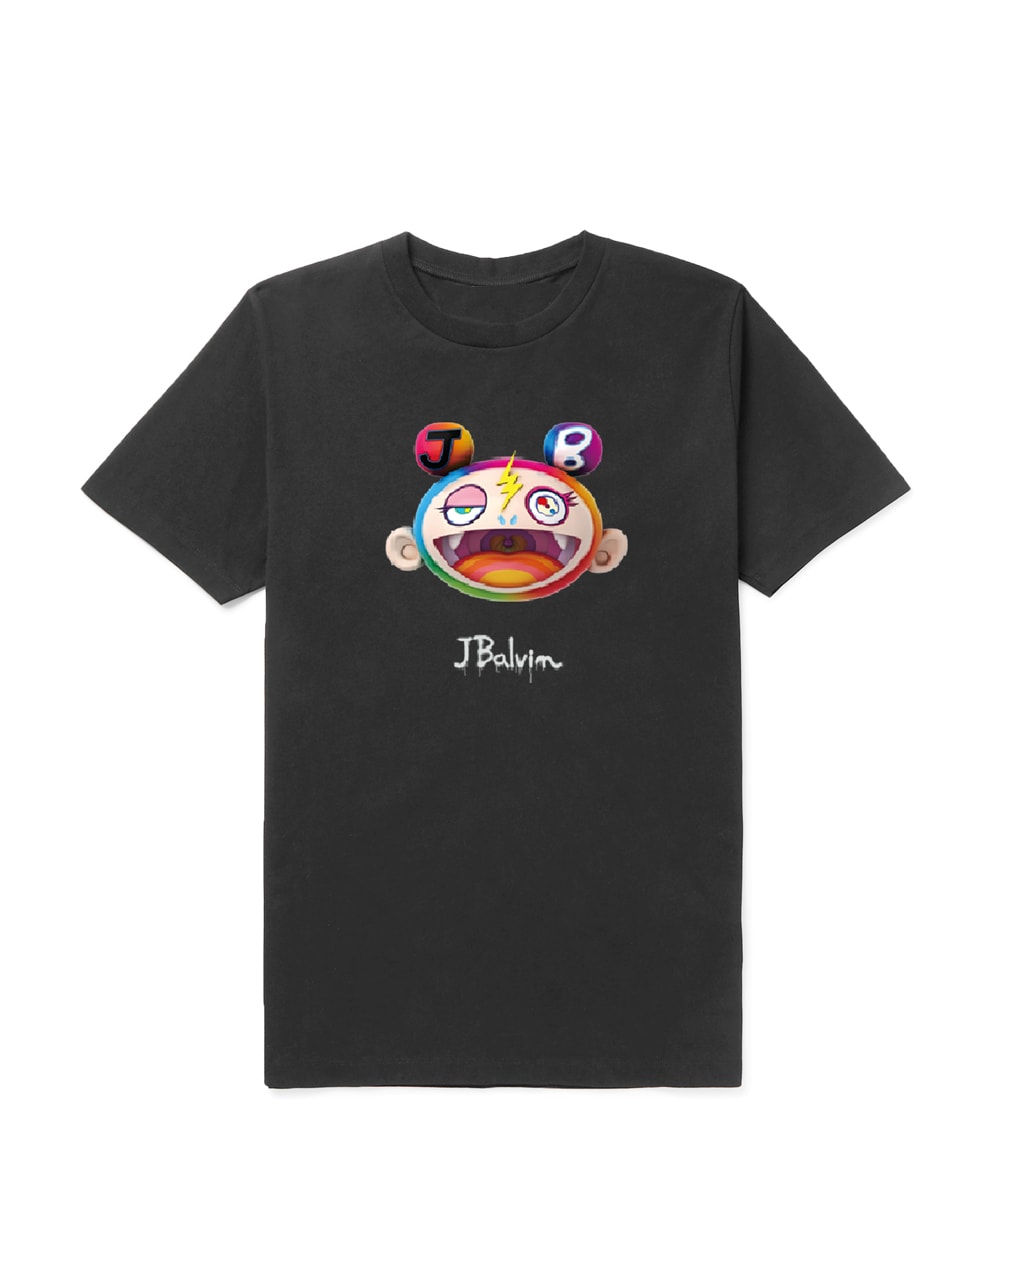 J Balvin x Takashi Murakami 'Colores' Merch Final Drop collection tshirt  j balvin logo